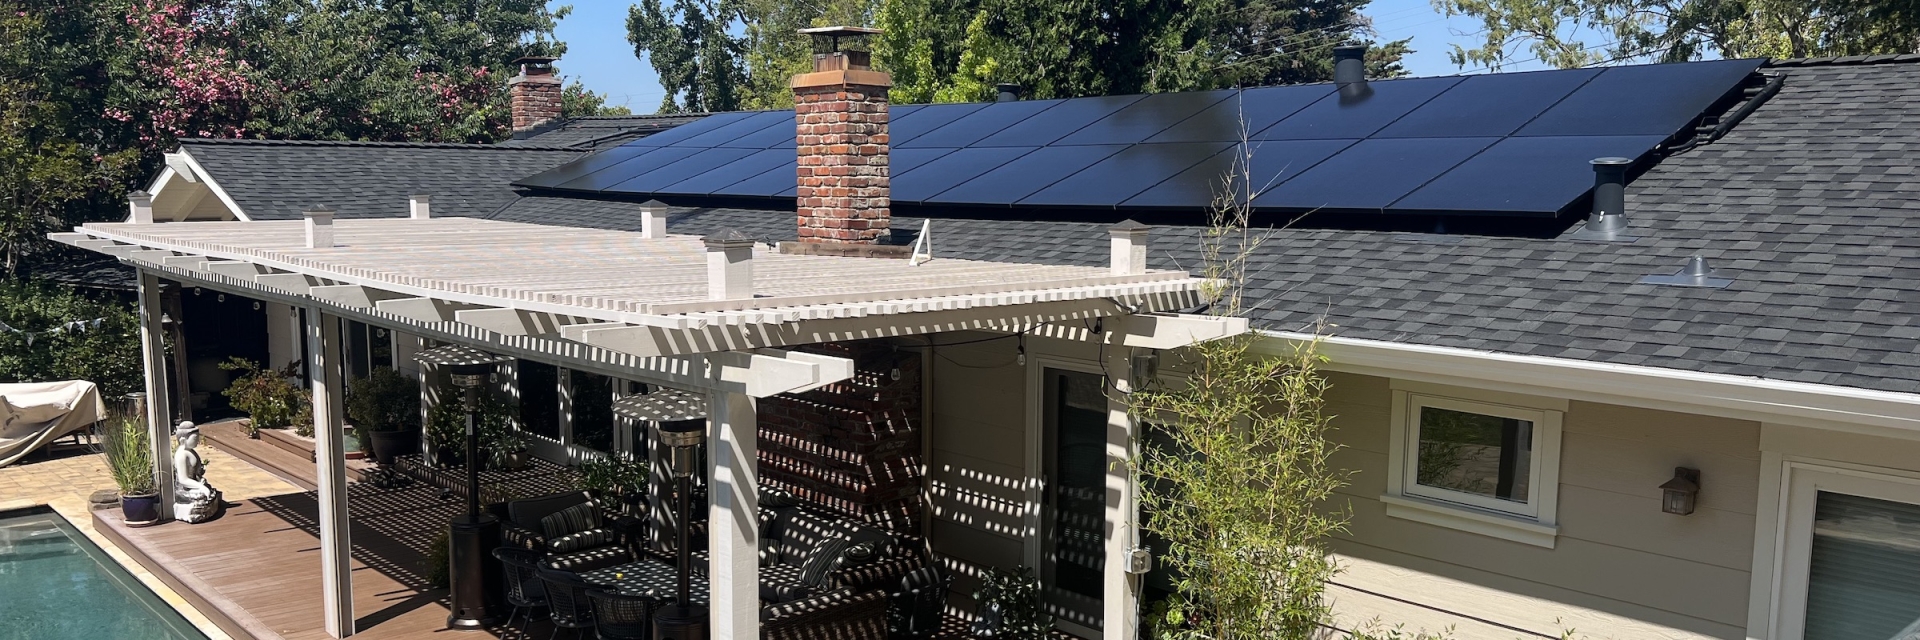 Home Solar PV & Solar Thermal PVT